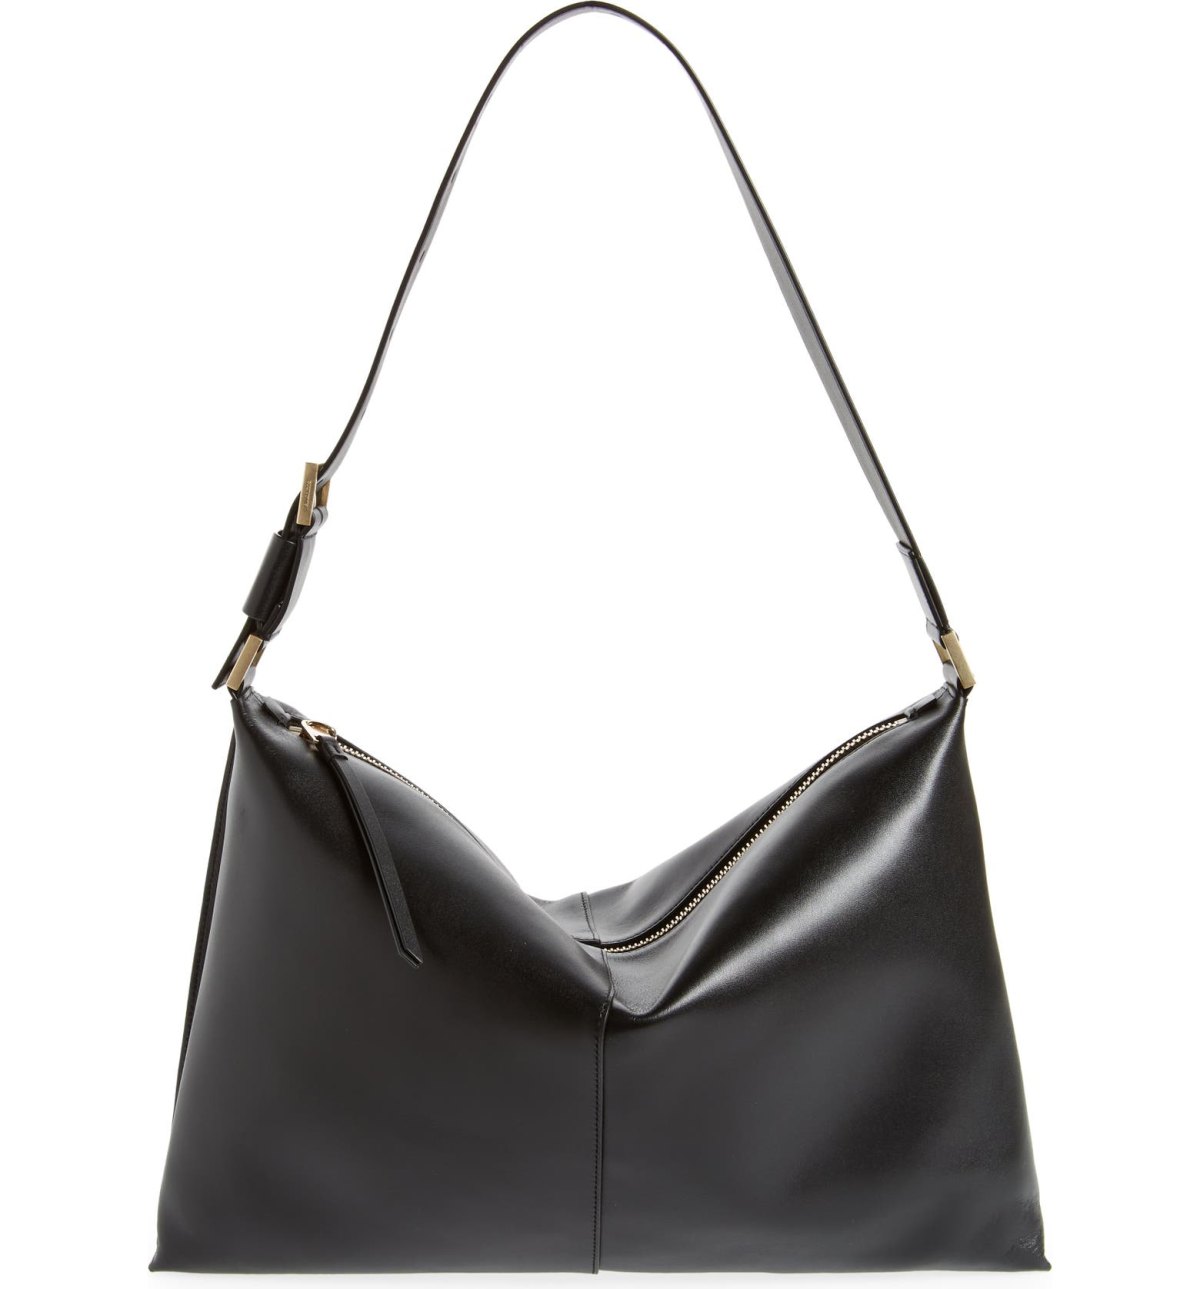 Trending Now, Shop Women's Best-Selling Bags